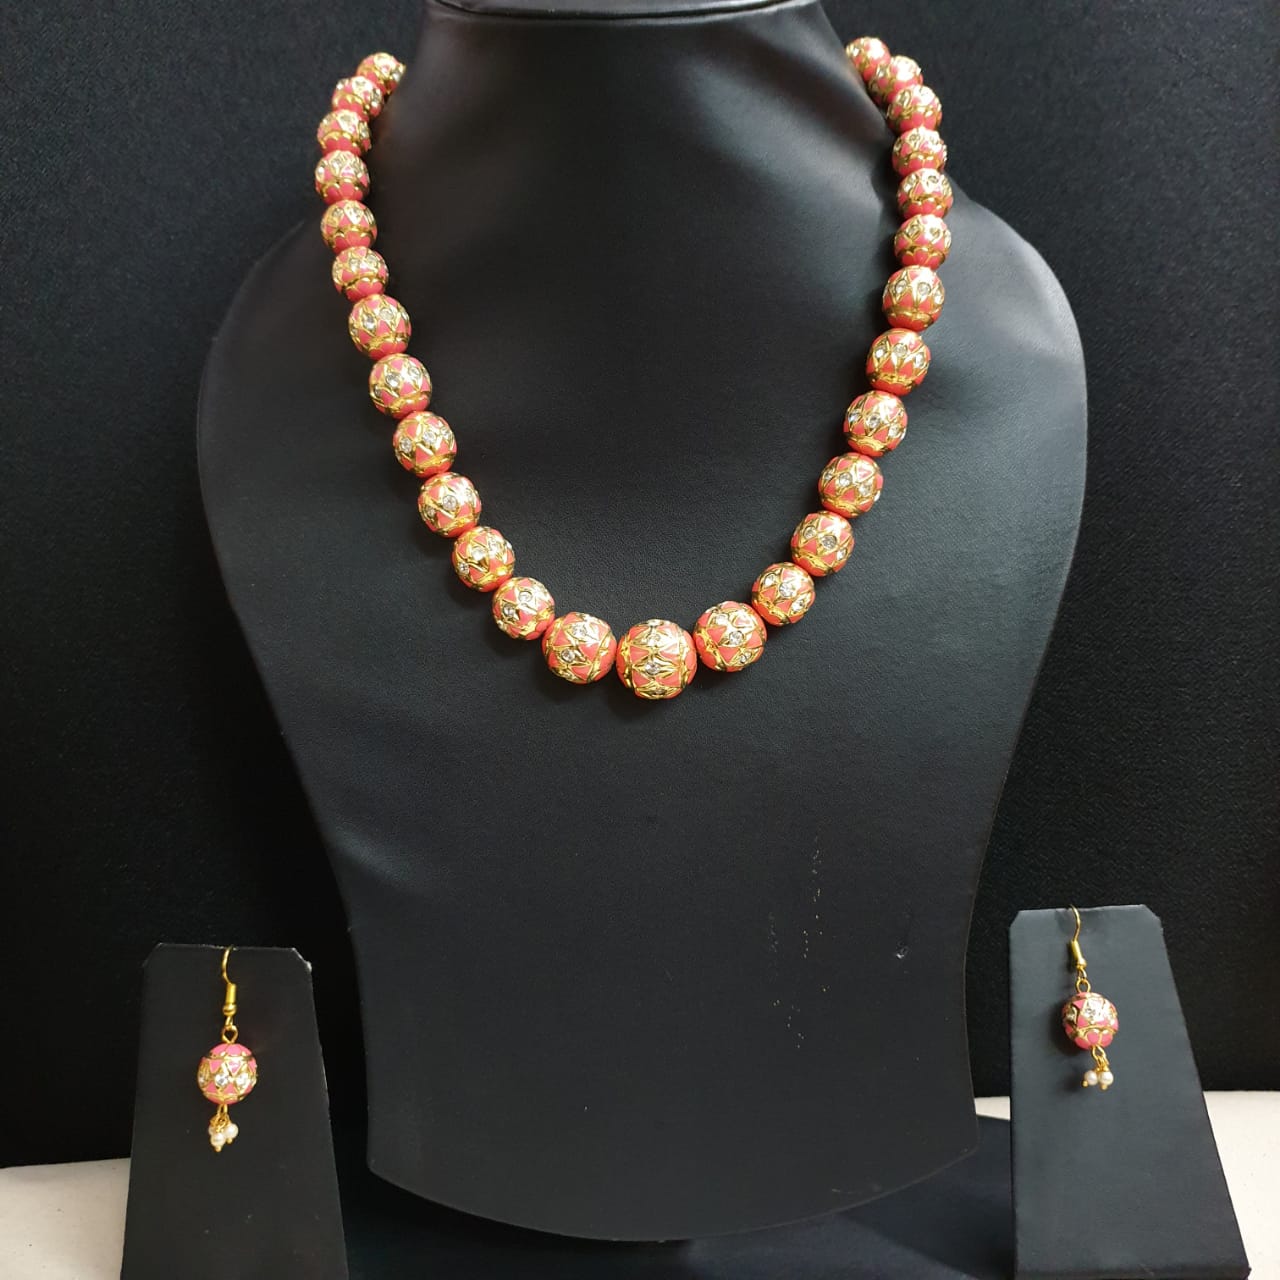 Peach Meenakari Beaded Necklace With Earrings